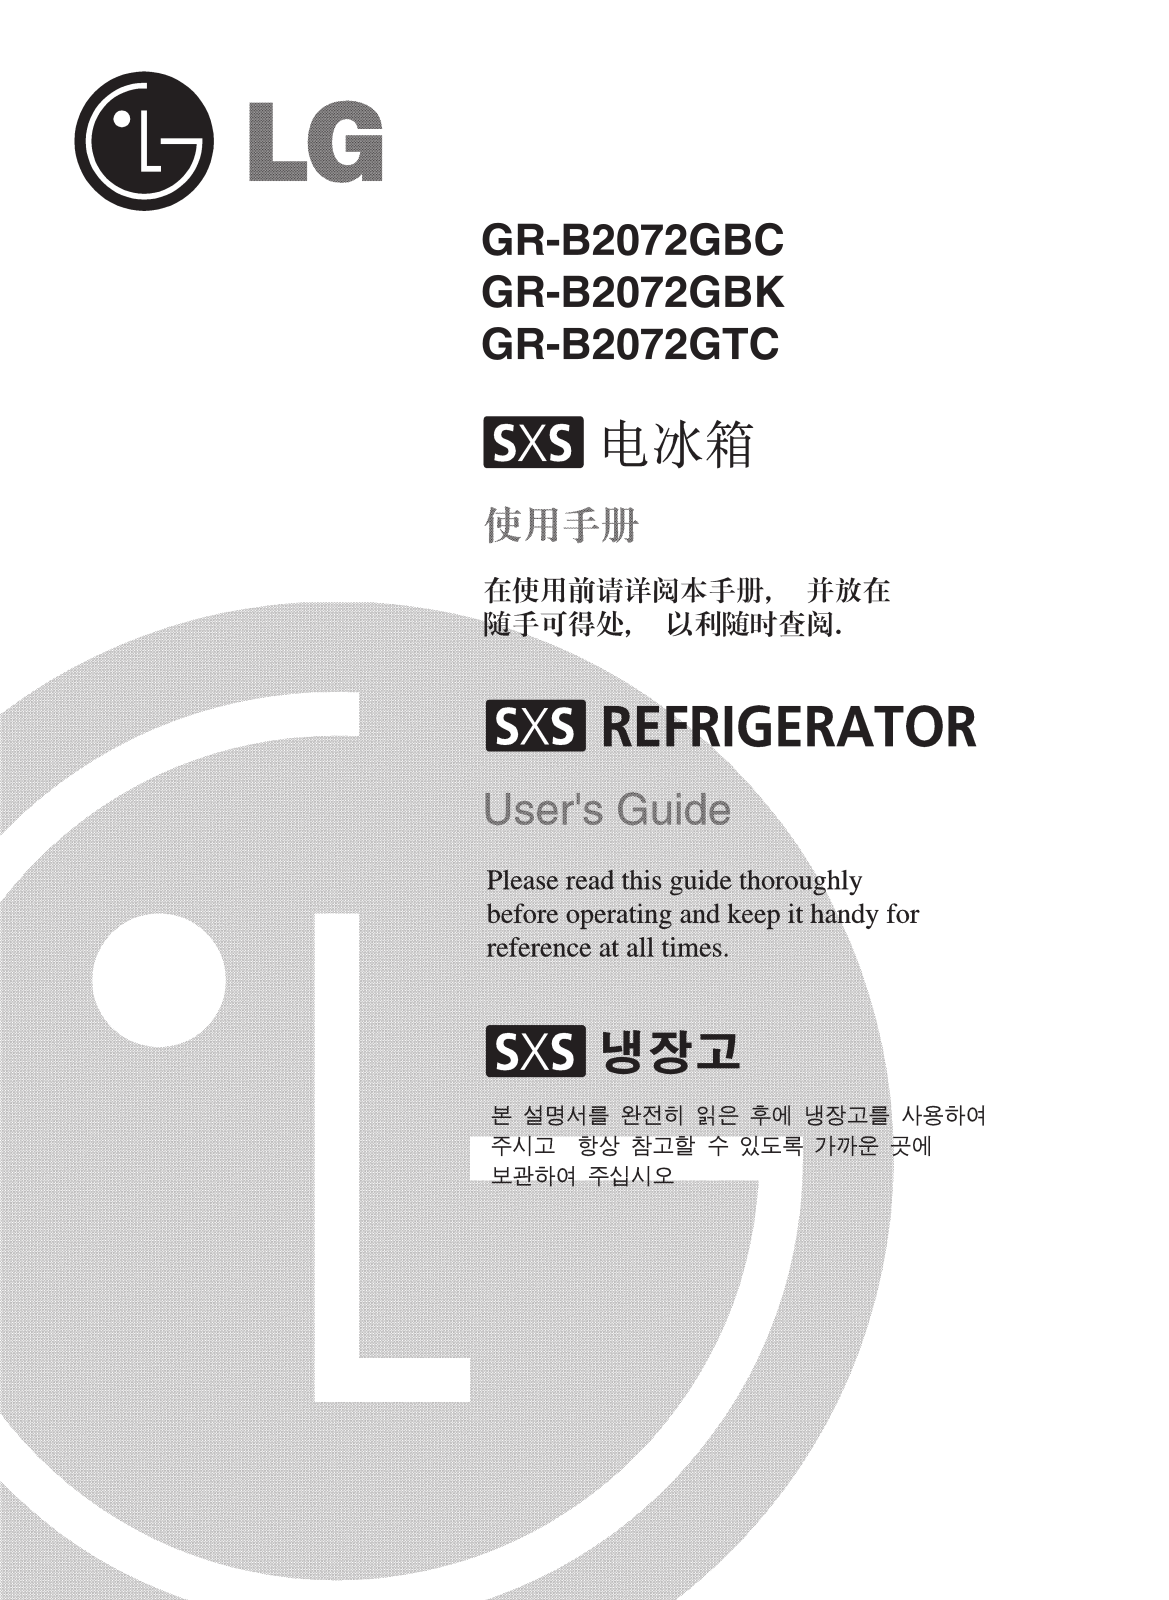 Lg GR-B2072GBK, GR-B2072GBC, GR-B2072GTC User Manual